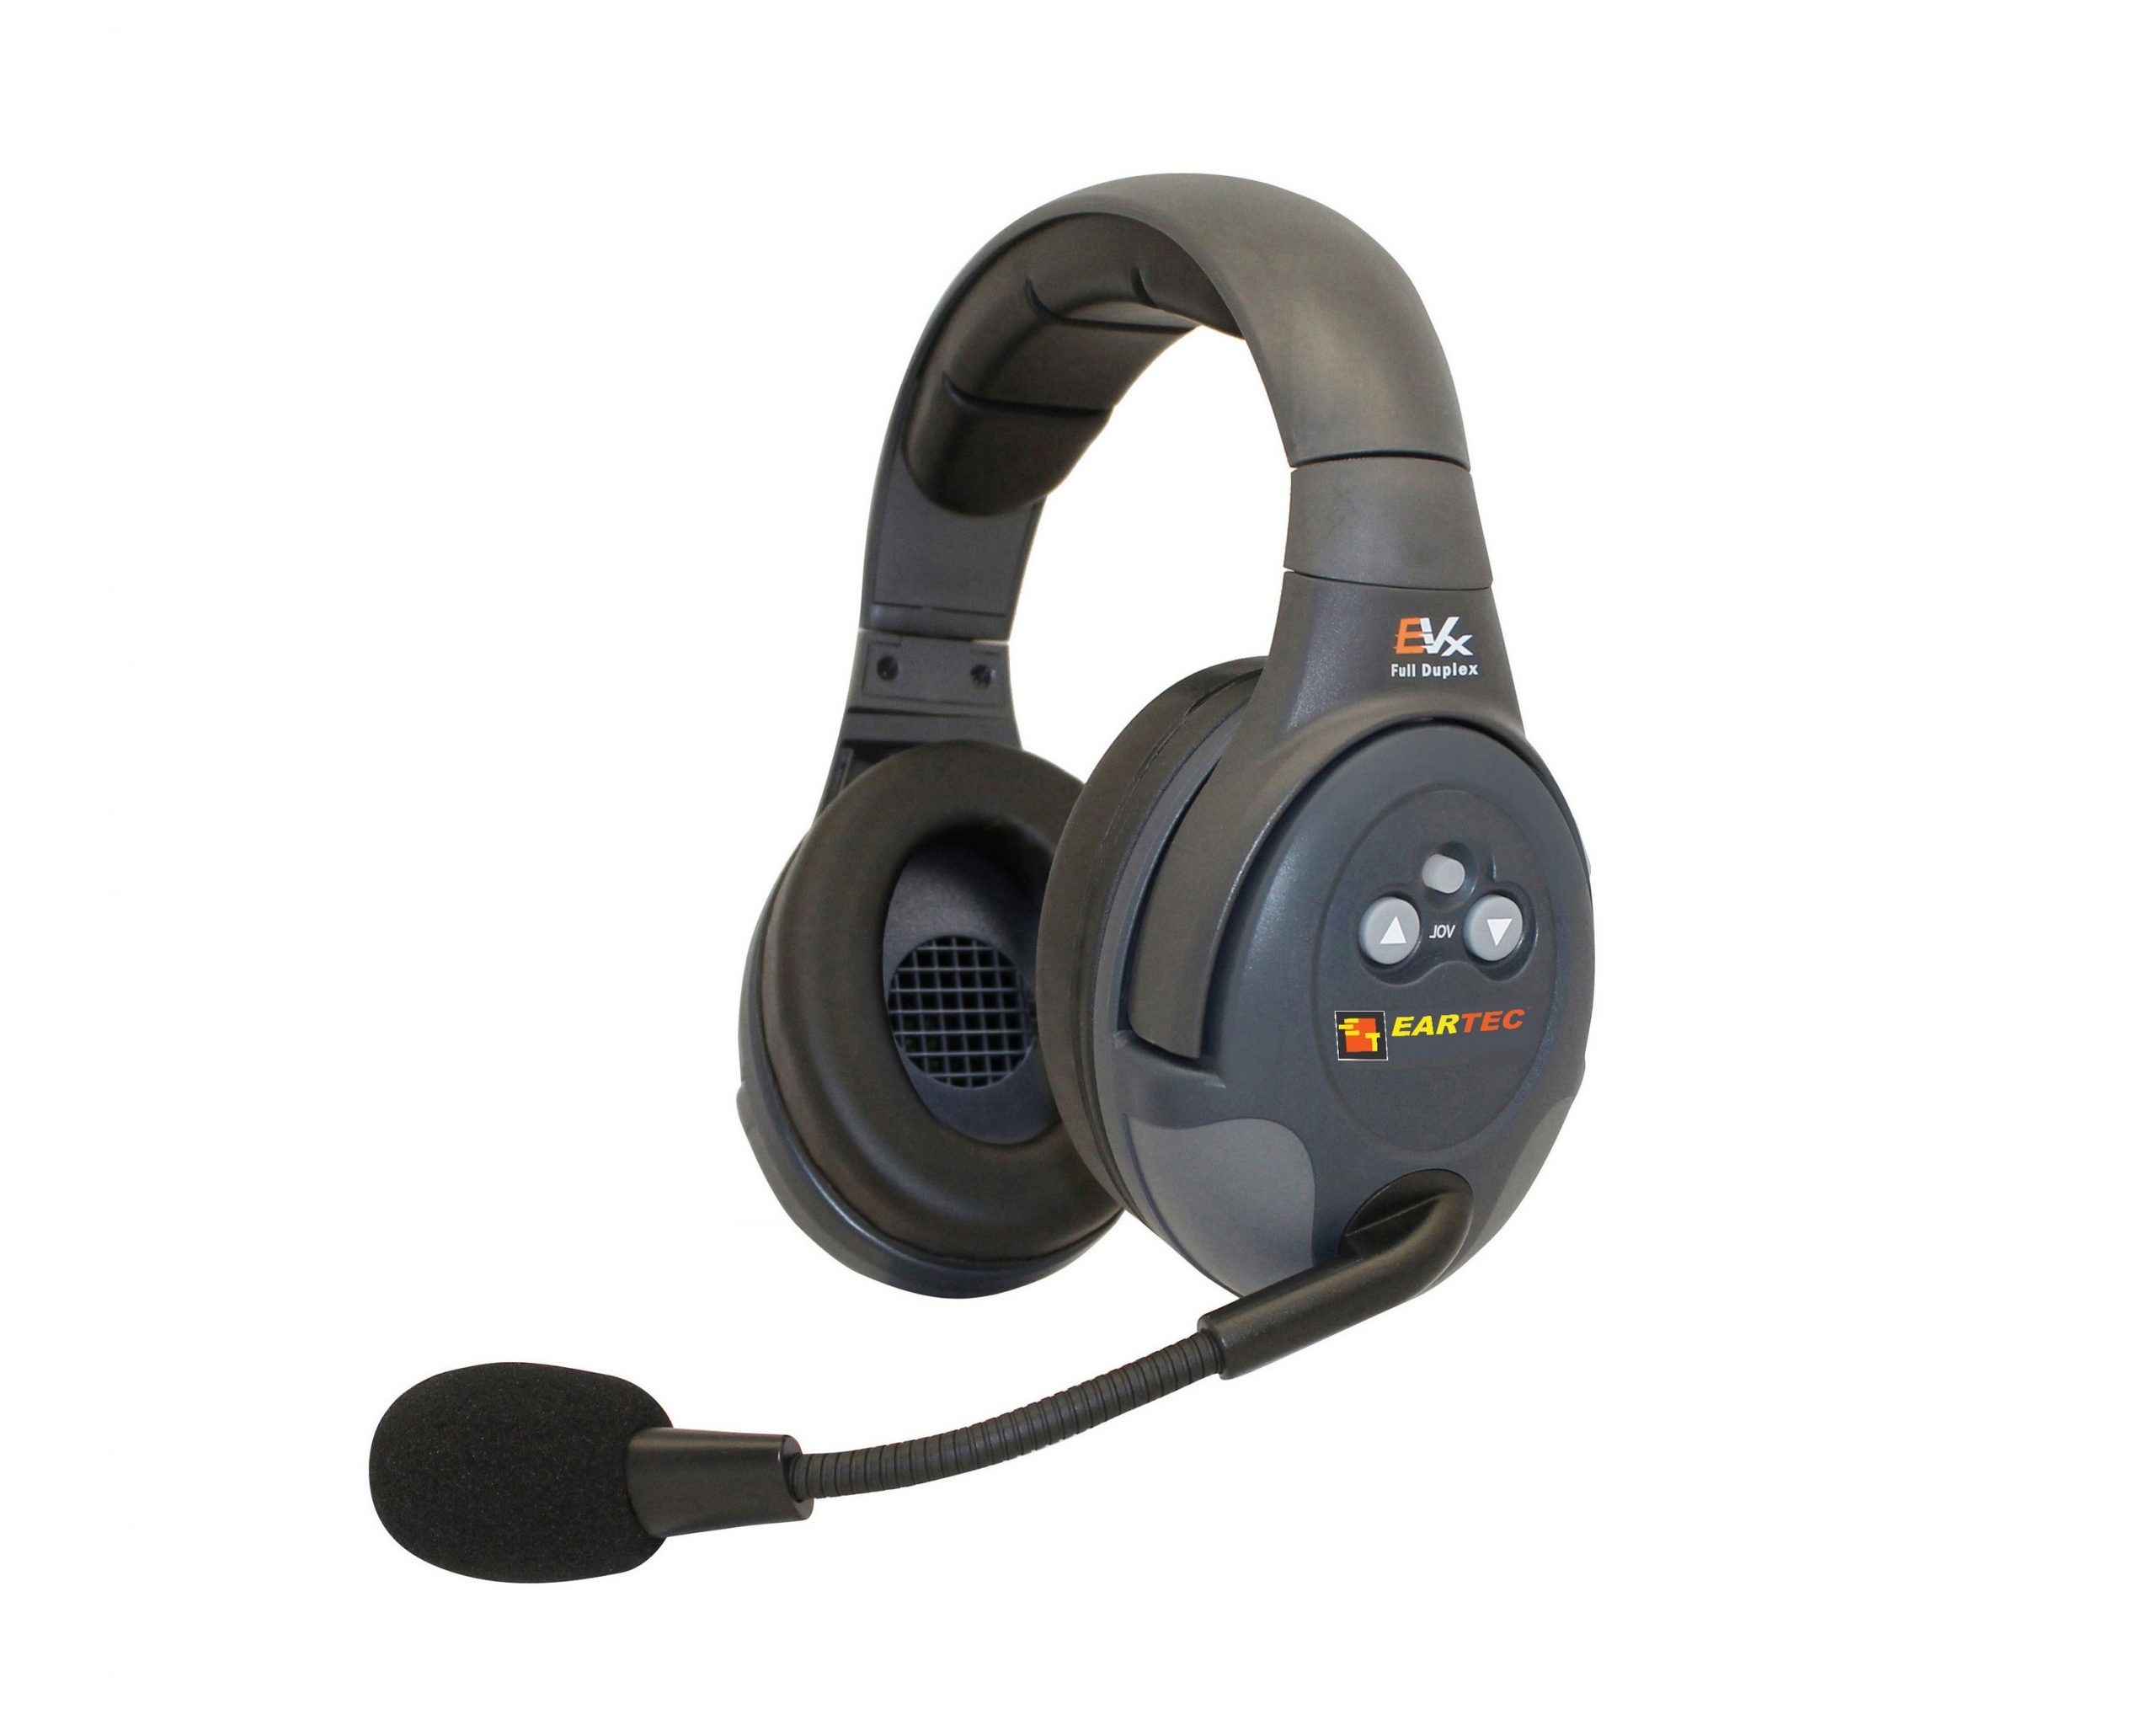 Eartec EVADE EVXDR Full Duplex Wireless Intercom Dual Speaker Headset (REMOTE)